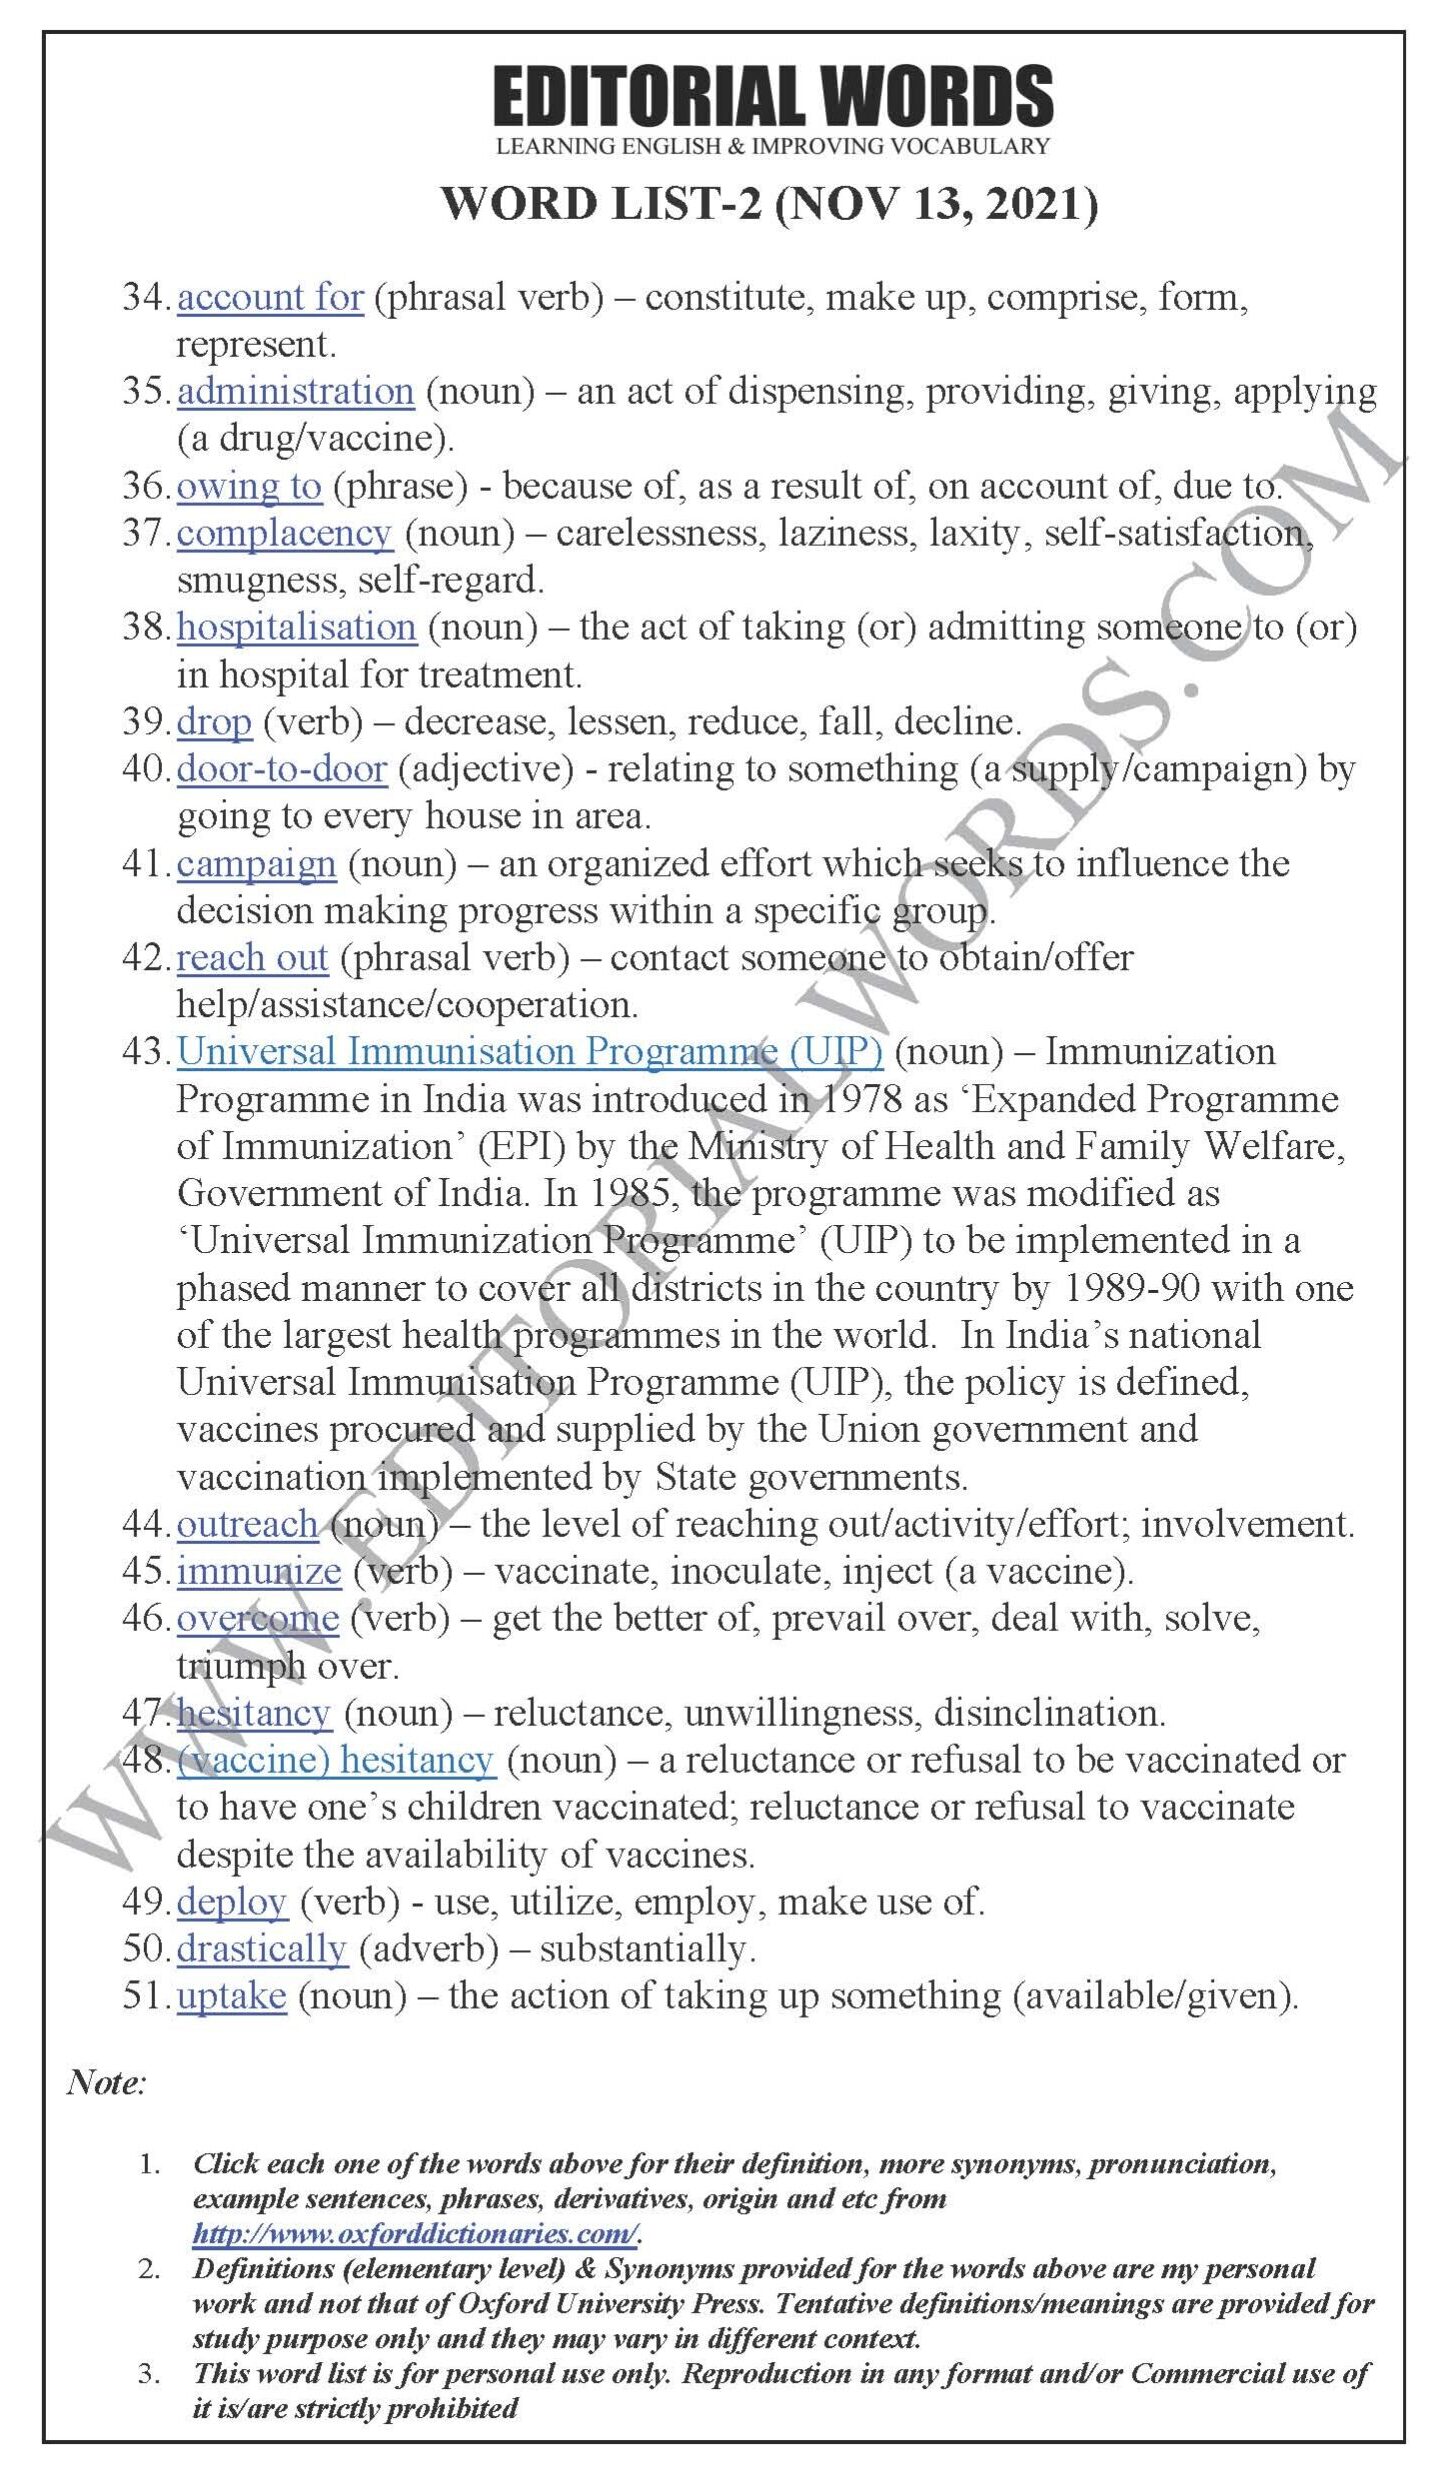 The Hindu Editorial (Focus on full vaccination) – Nov 13, 2021